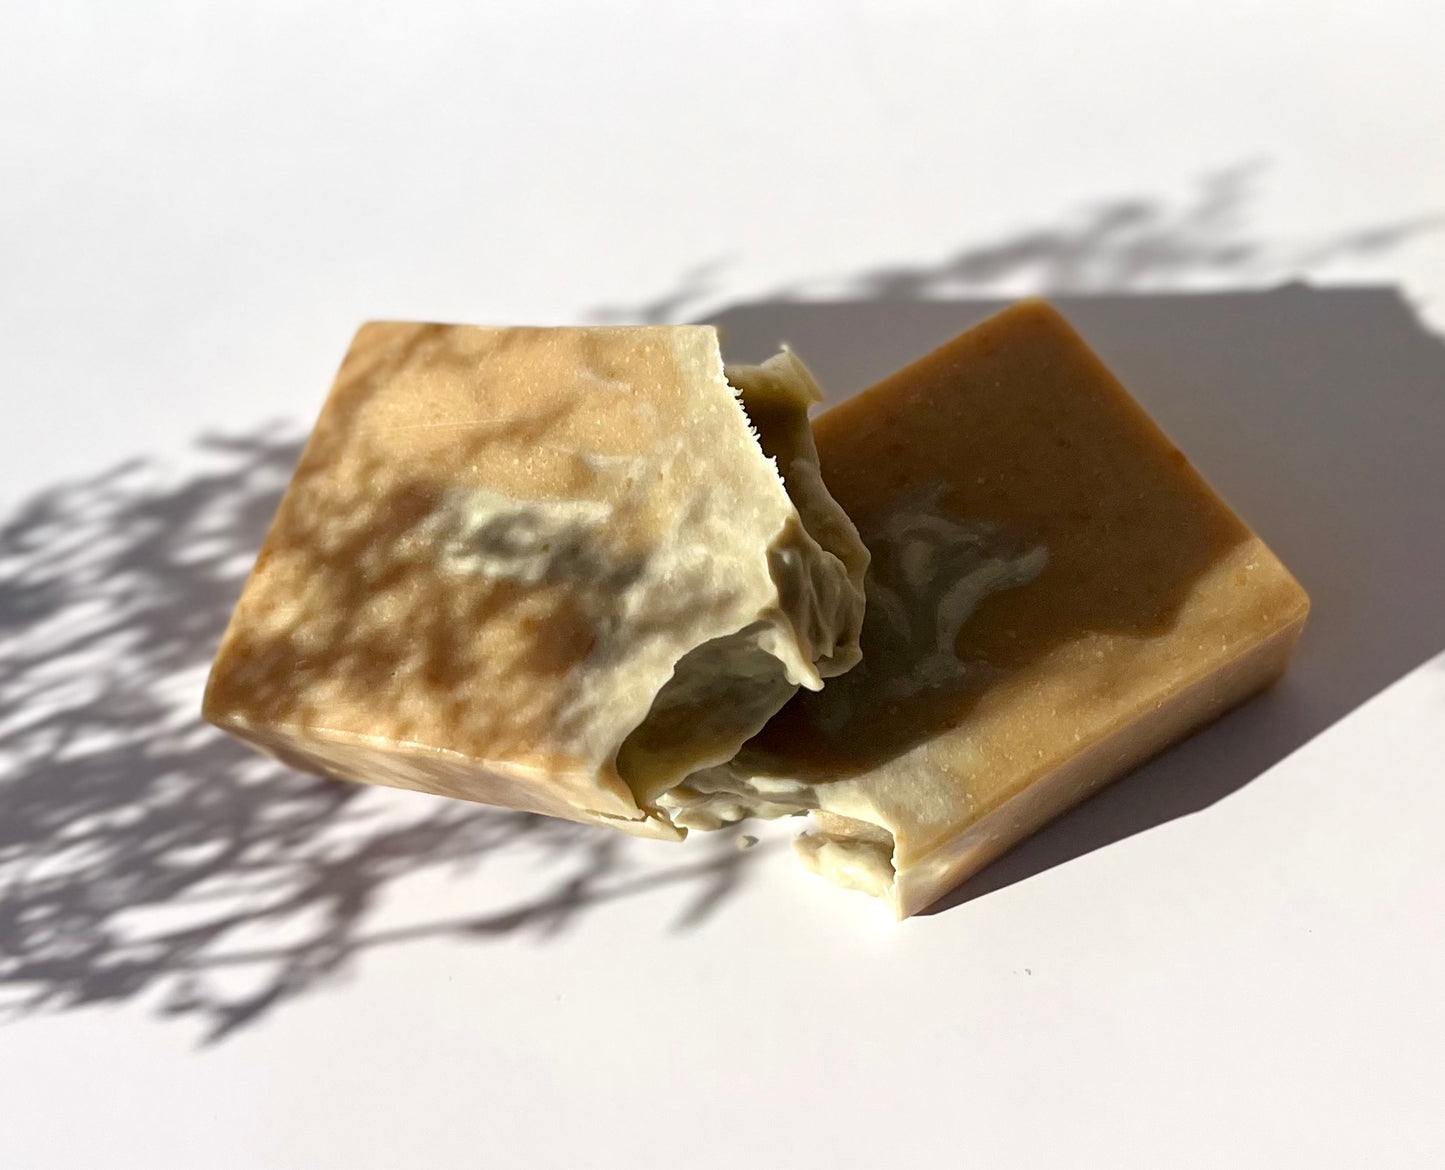 A bar soap - Bay Rum Soap